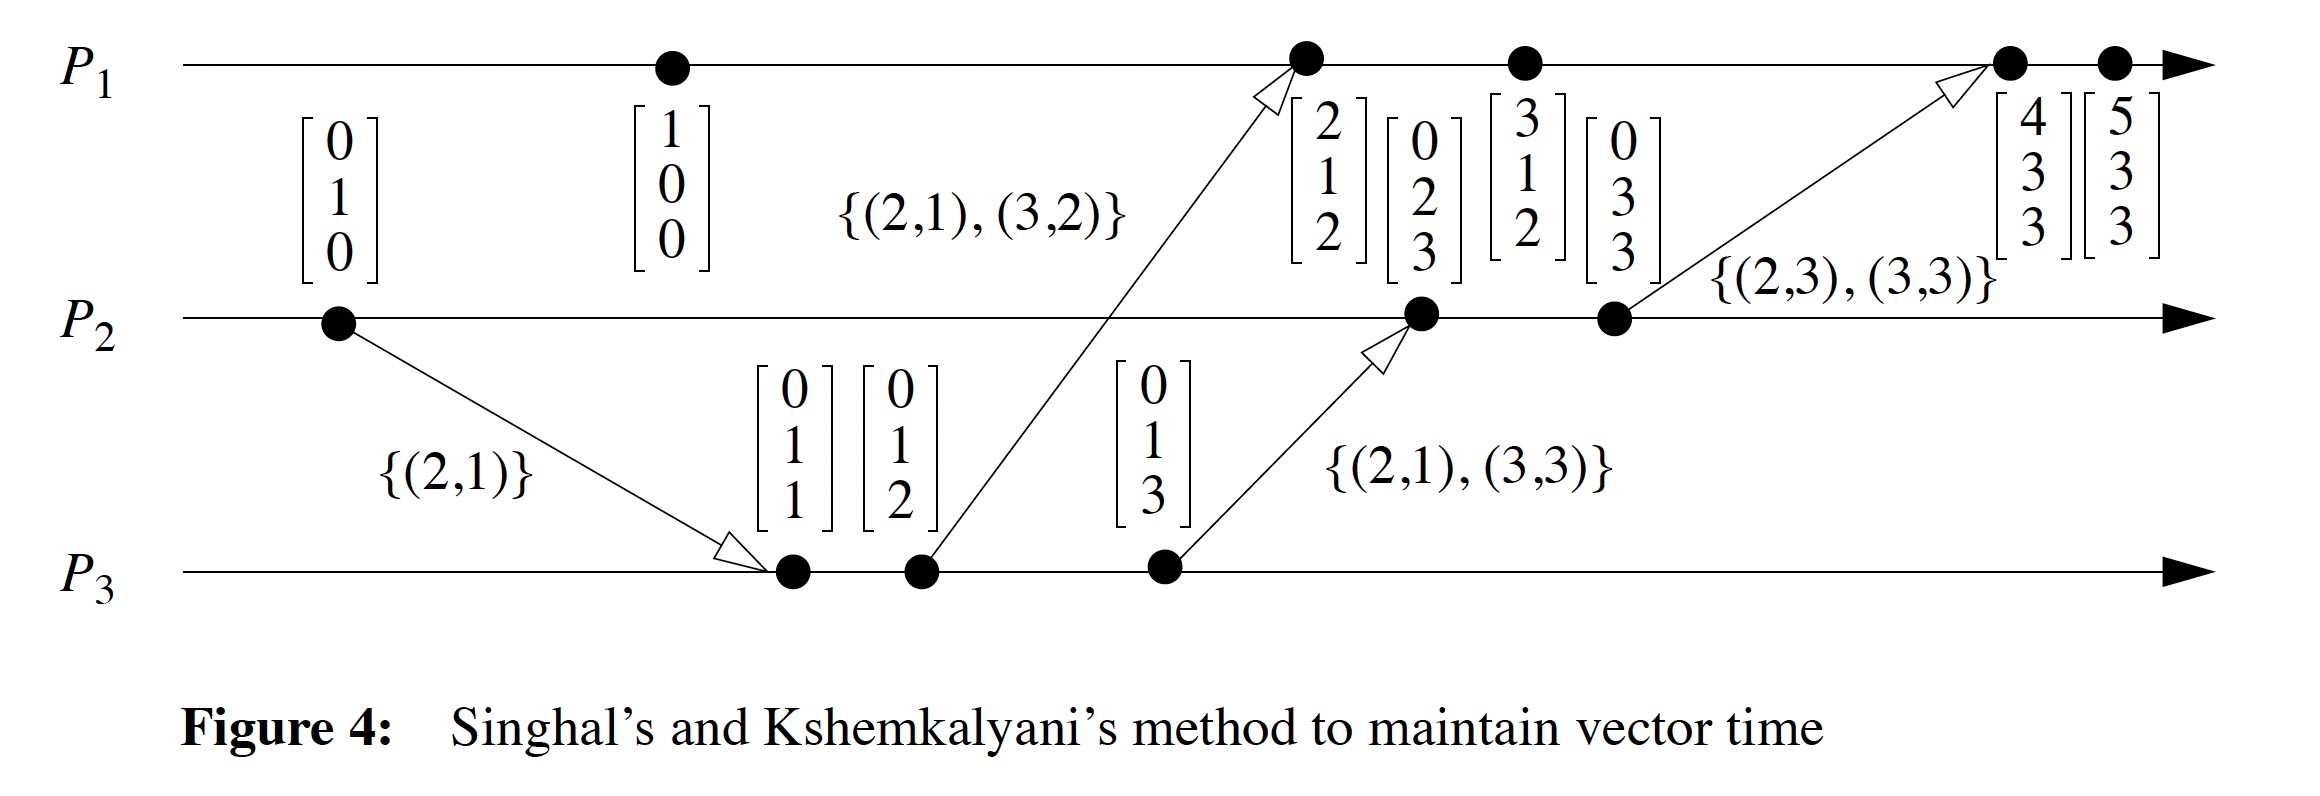 Singhal’s and Kshemkalyani’s method to maintain vector time